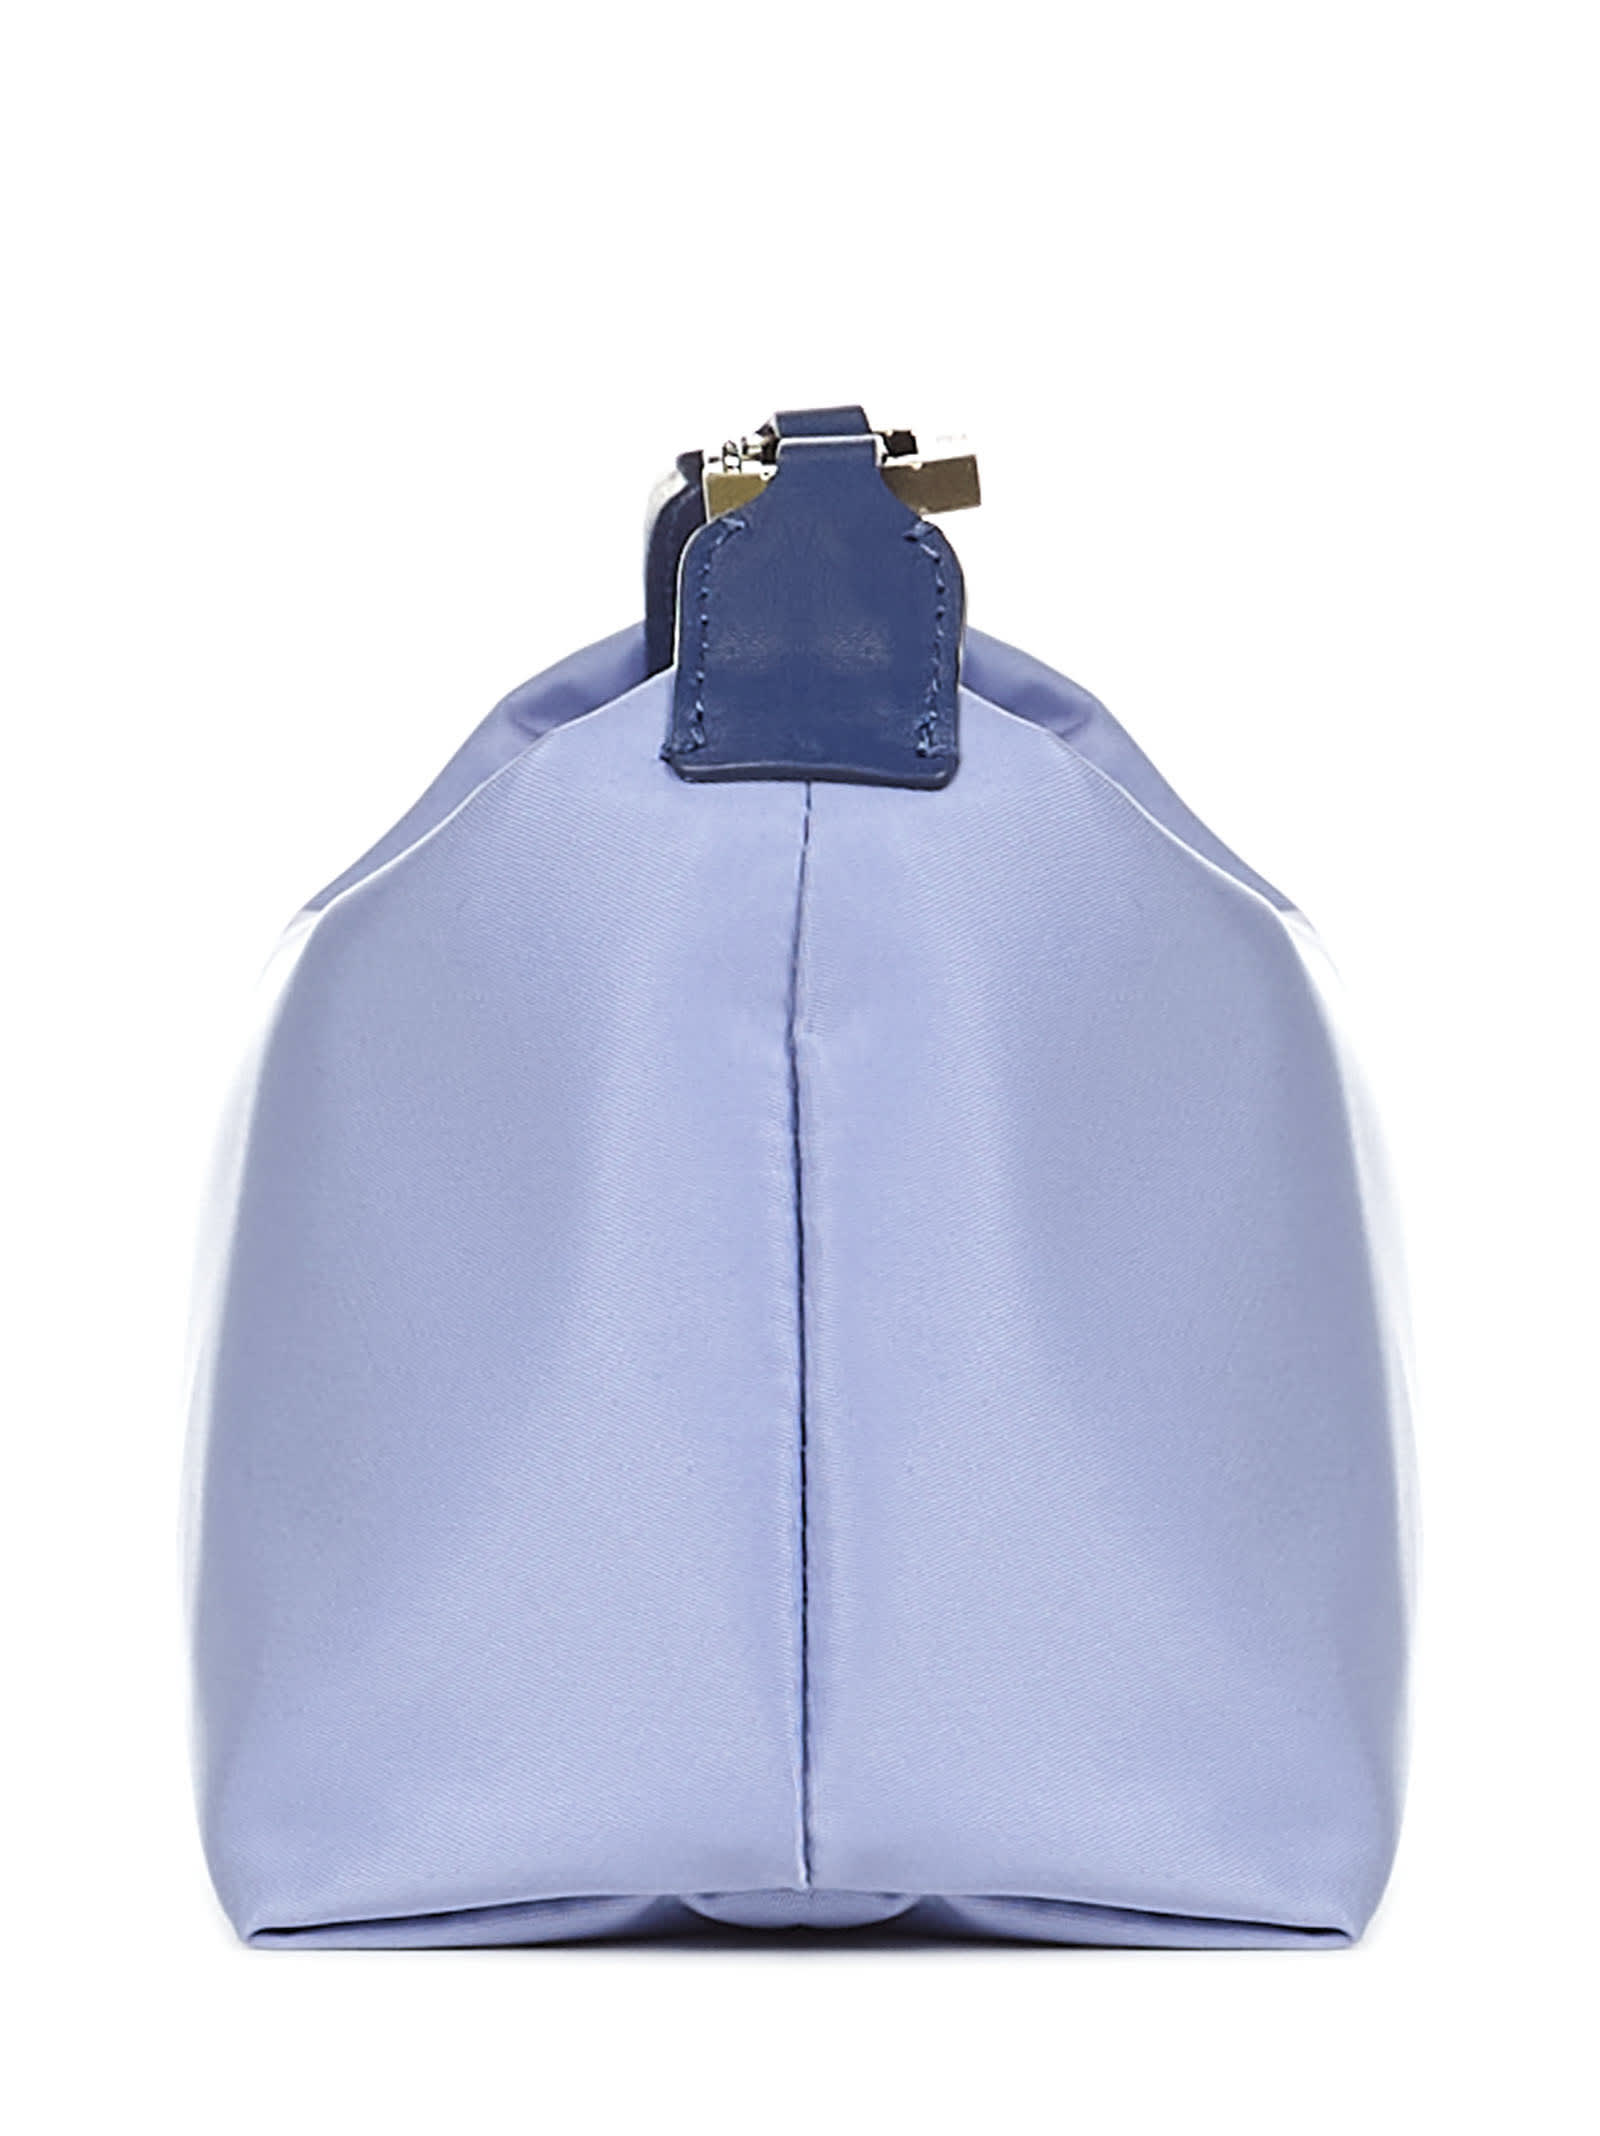 Backpacks Marc Jacobs - Crackle blue leather mini backpack